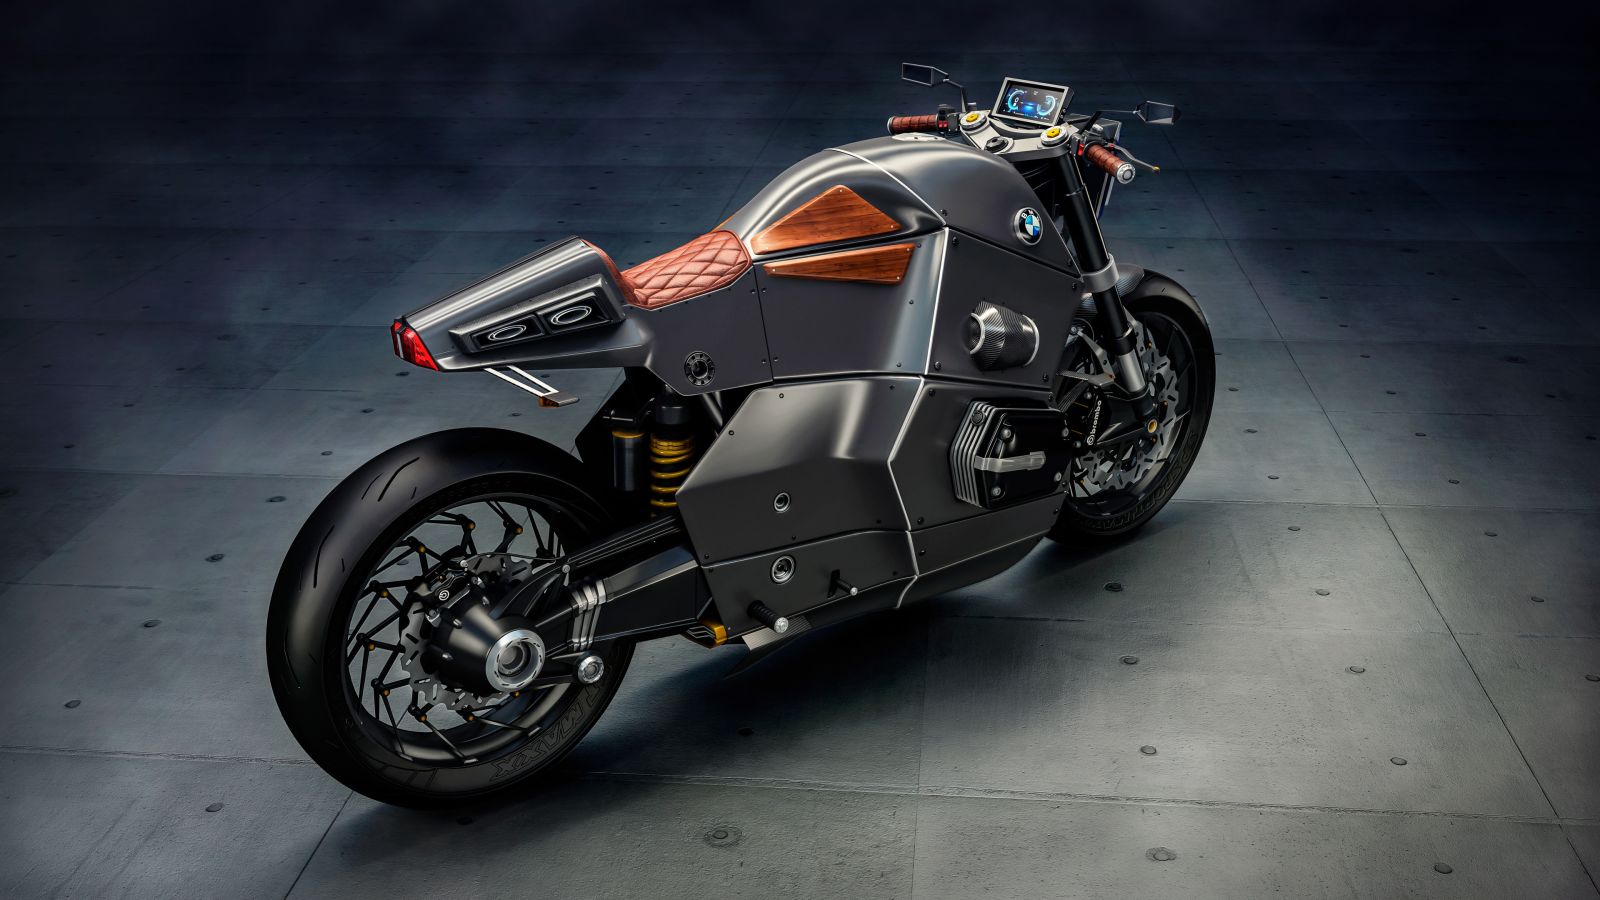 Jans Slapins Vehicle Motorcycle Bmw Futuristic Cgi Bmw M Bike Concept 3d Render Wallpapers Hd Desktop And Mobile Backgrounds